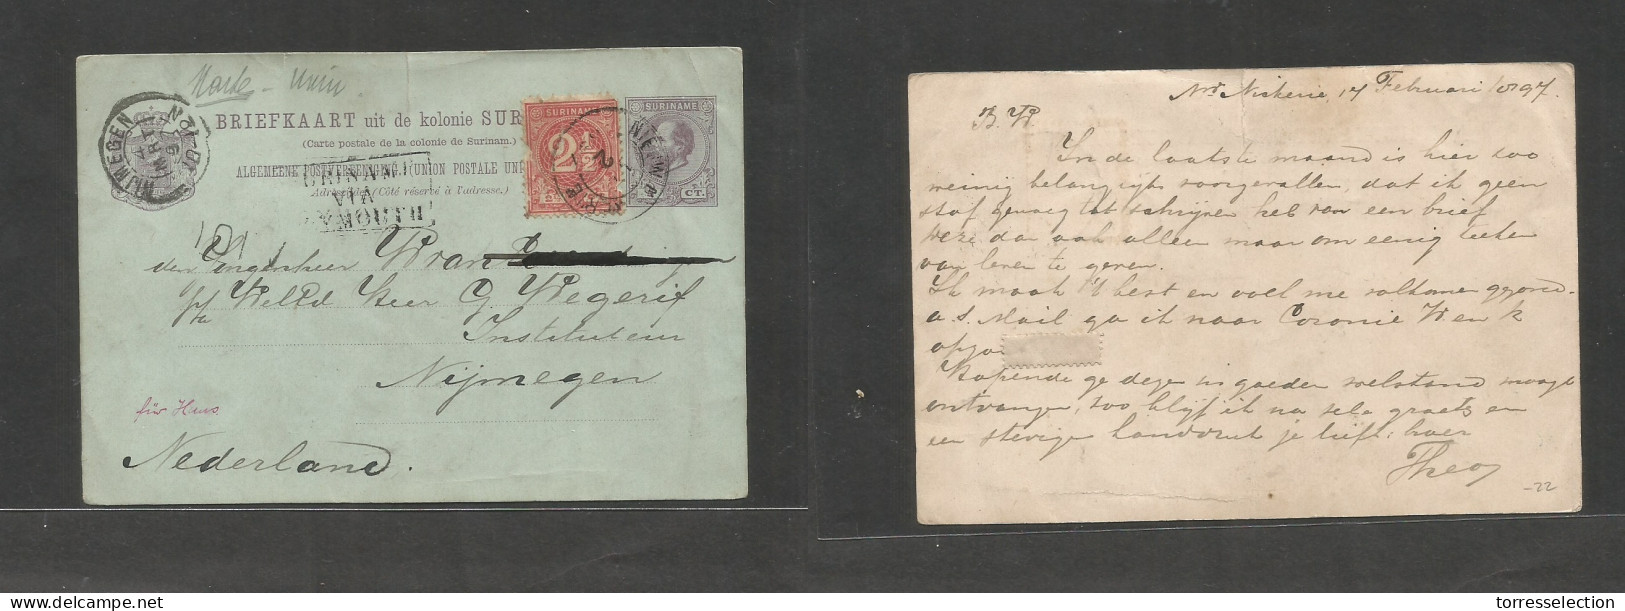 SURINAME. 1897 (17 Febr) Newe Nickenie - Netherlands, Nigmegen (4 March) Lilac Stat Card + 2 1/2c Red Adtl, Tied Cds + " - Suriname